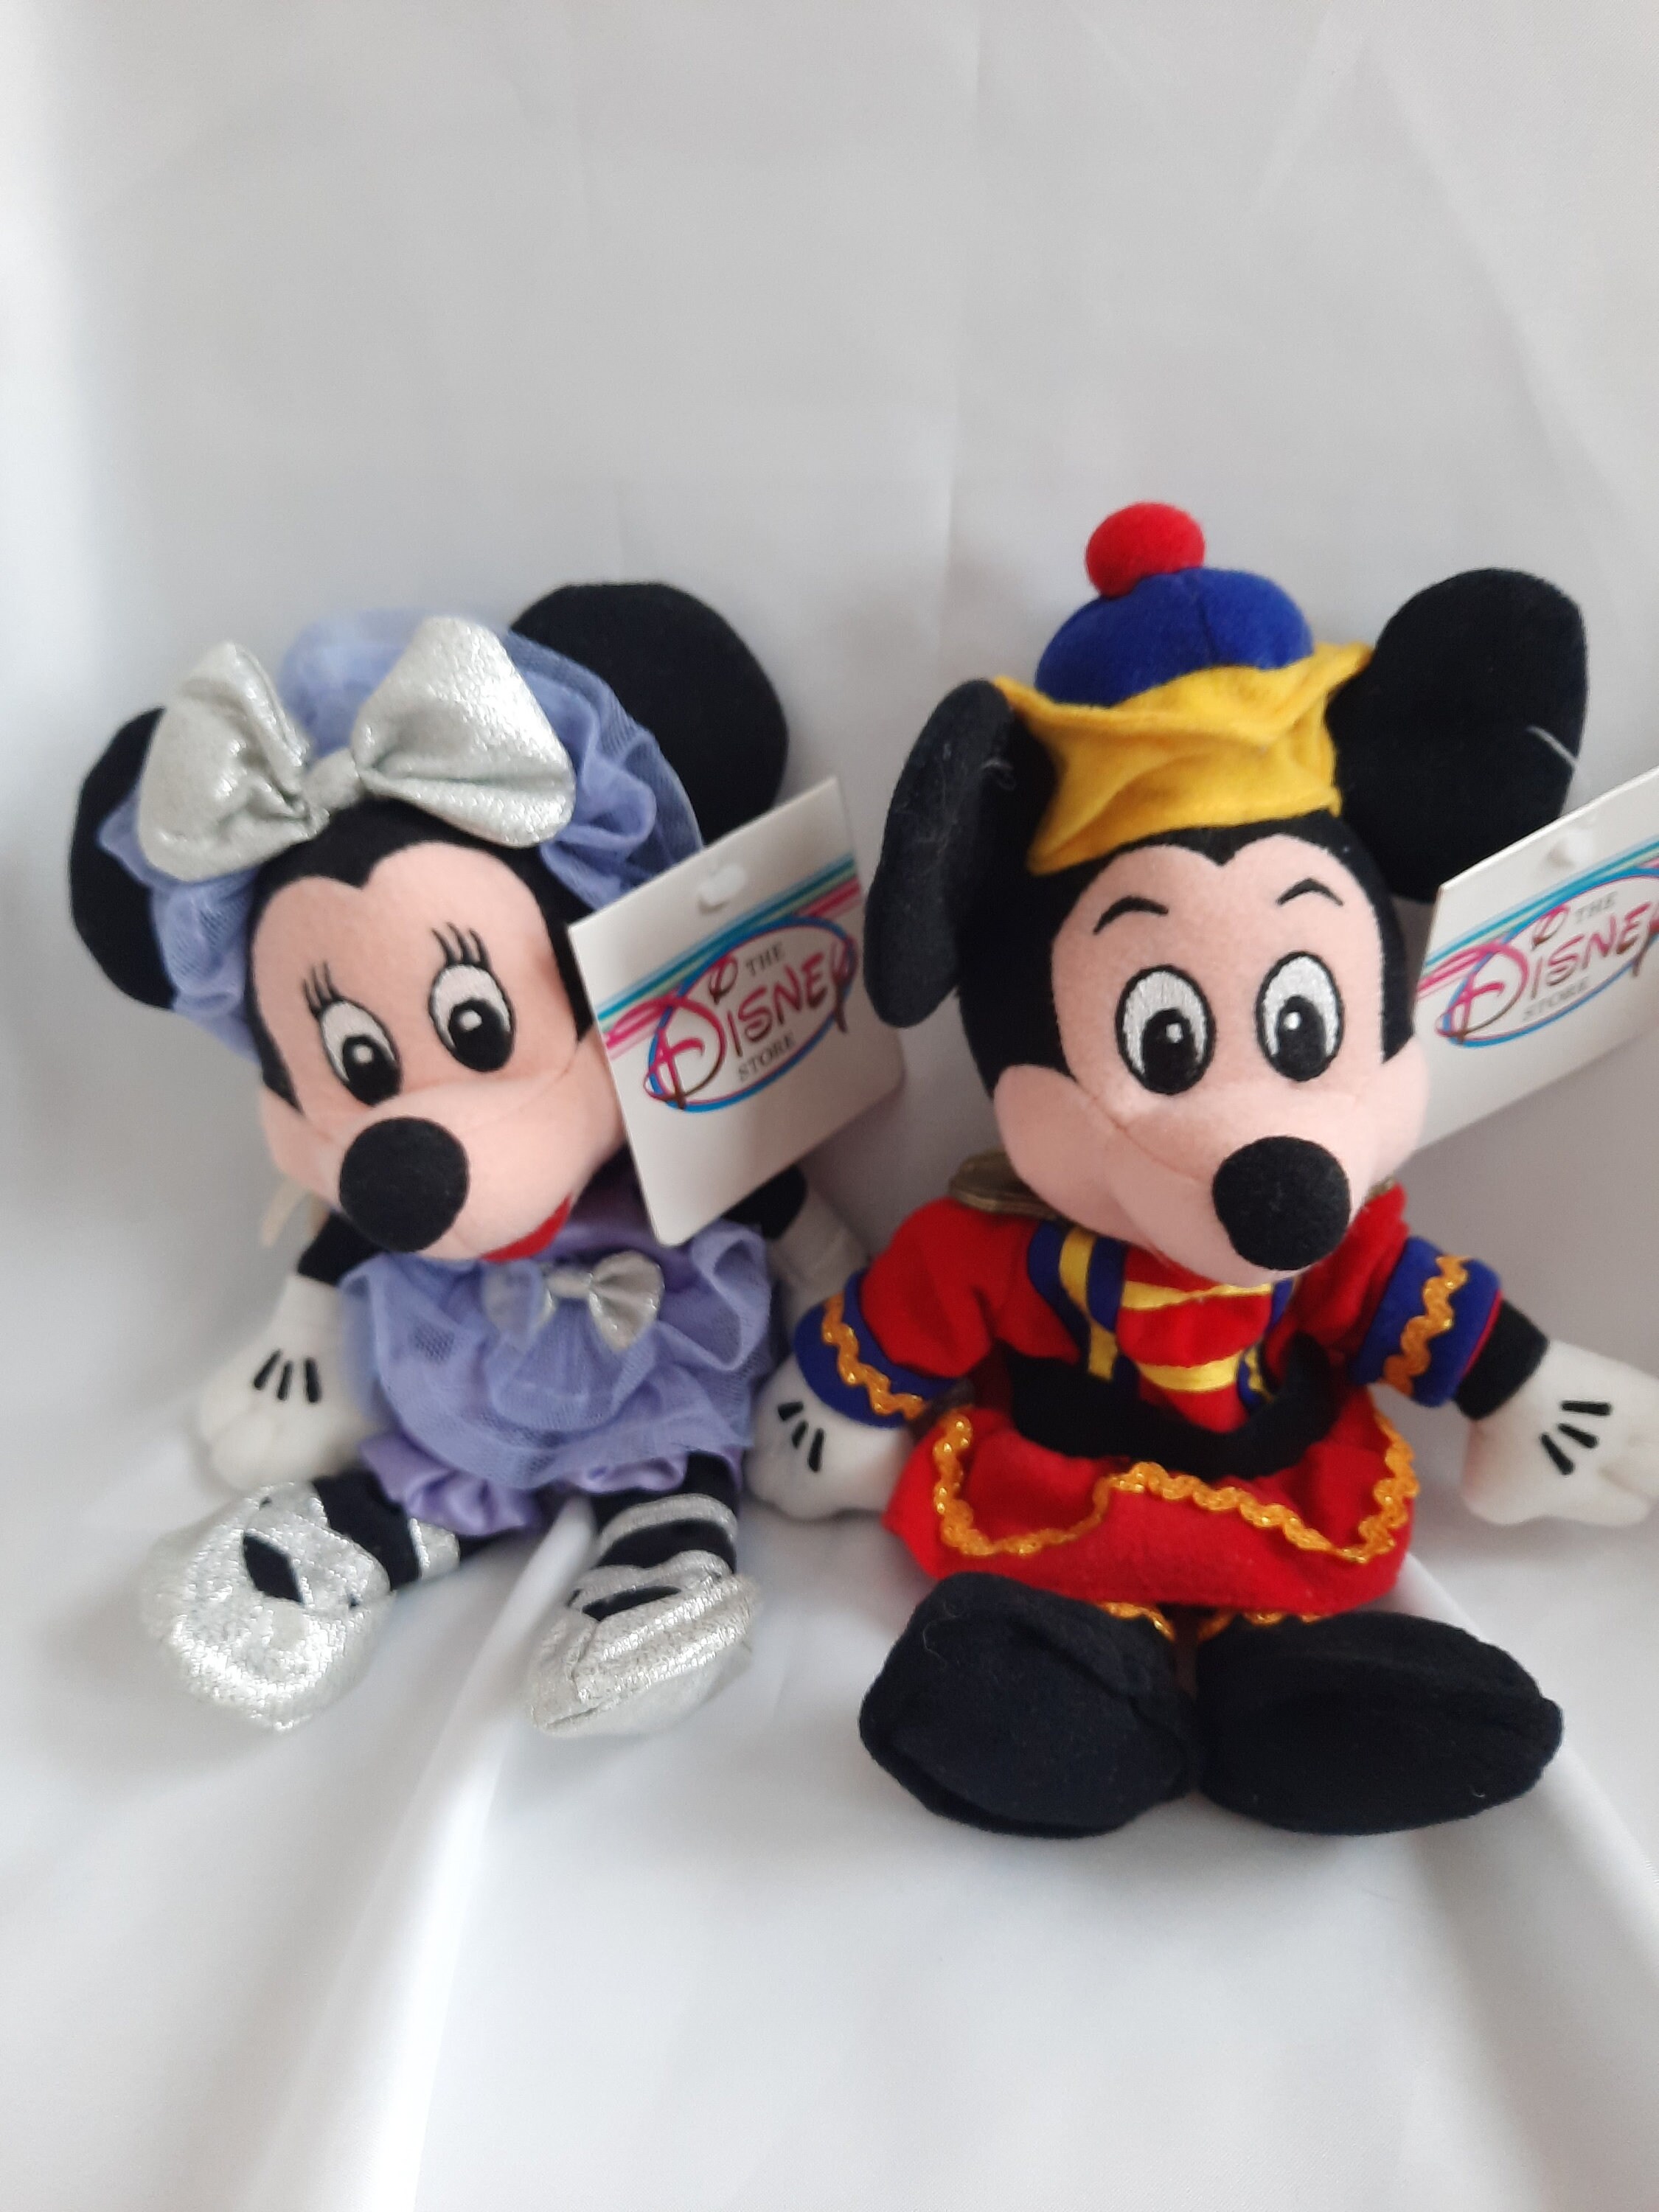 Disney Minnie Mouse Hallmark Red Box Ornament - Hooked on Hallmark